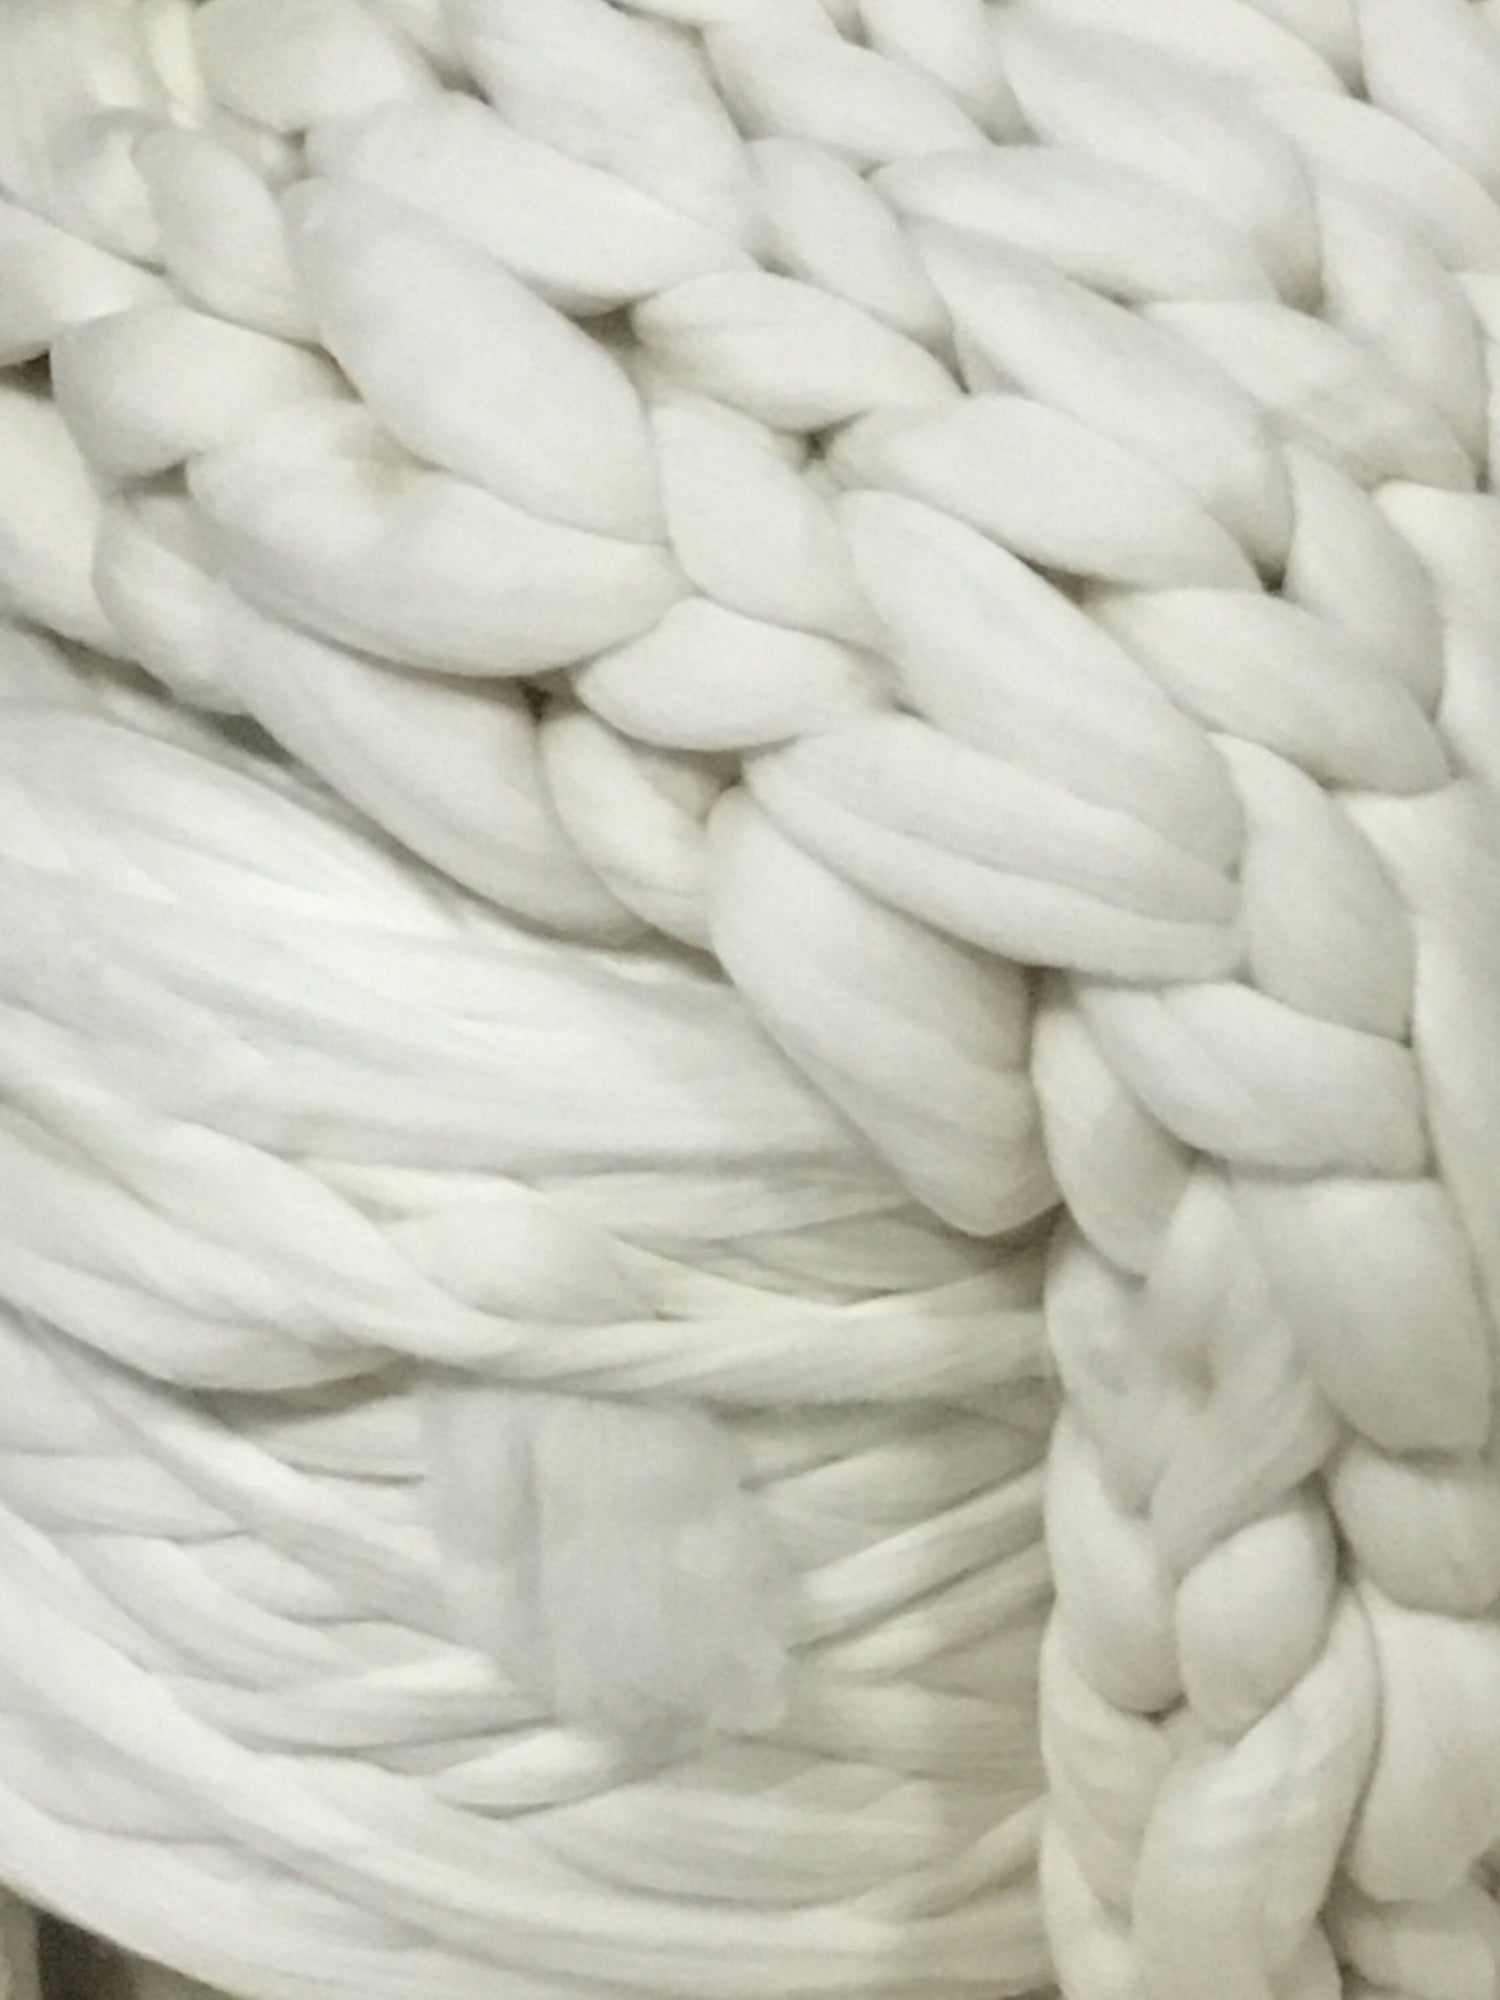 Wholesale Roving, Wholesale Wool, CHUNKY YARN, Big Yarn, Giant Yarn Wh –  Shep's Wool